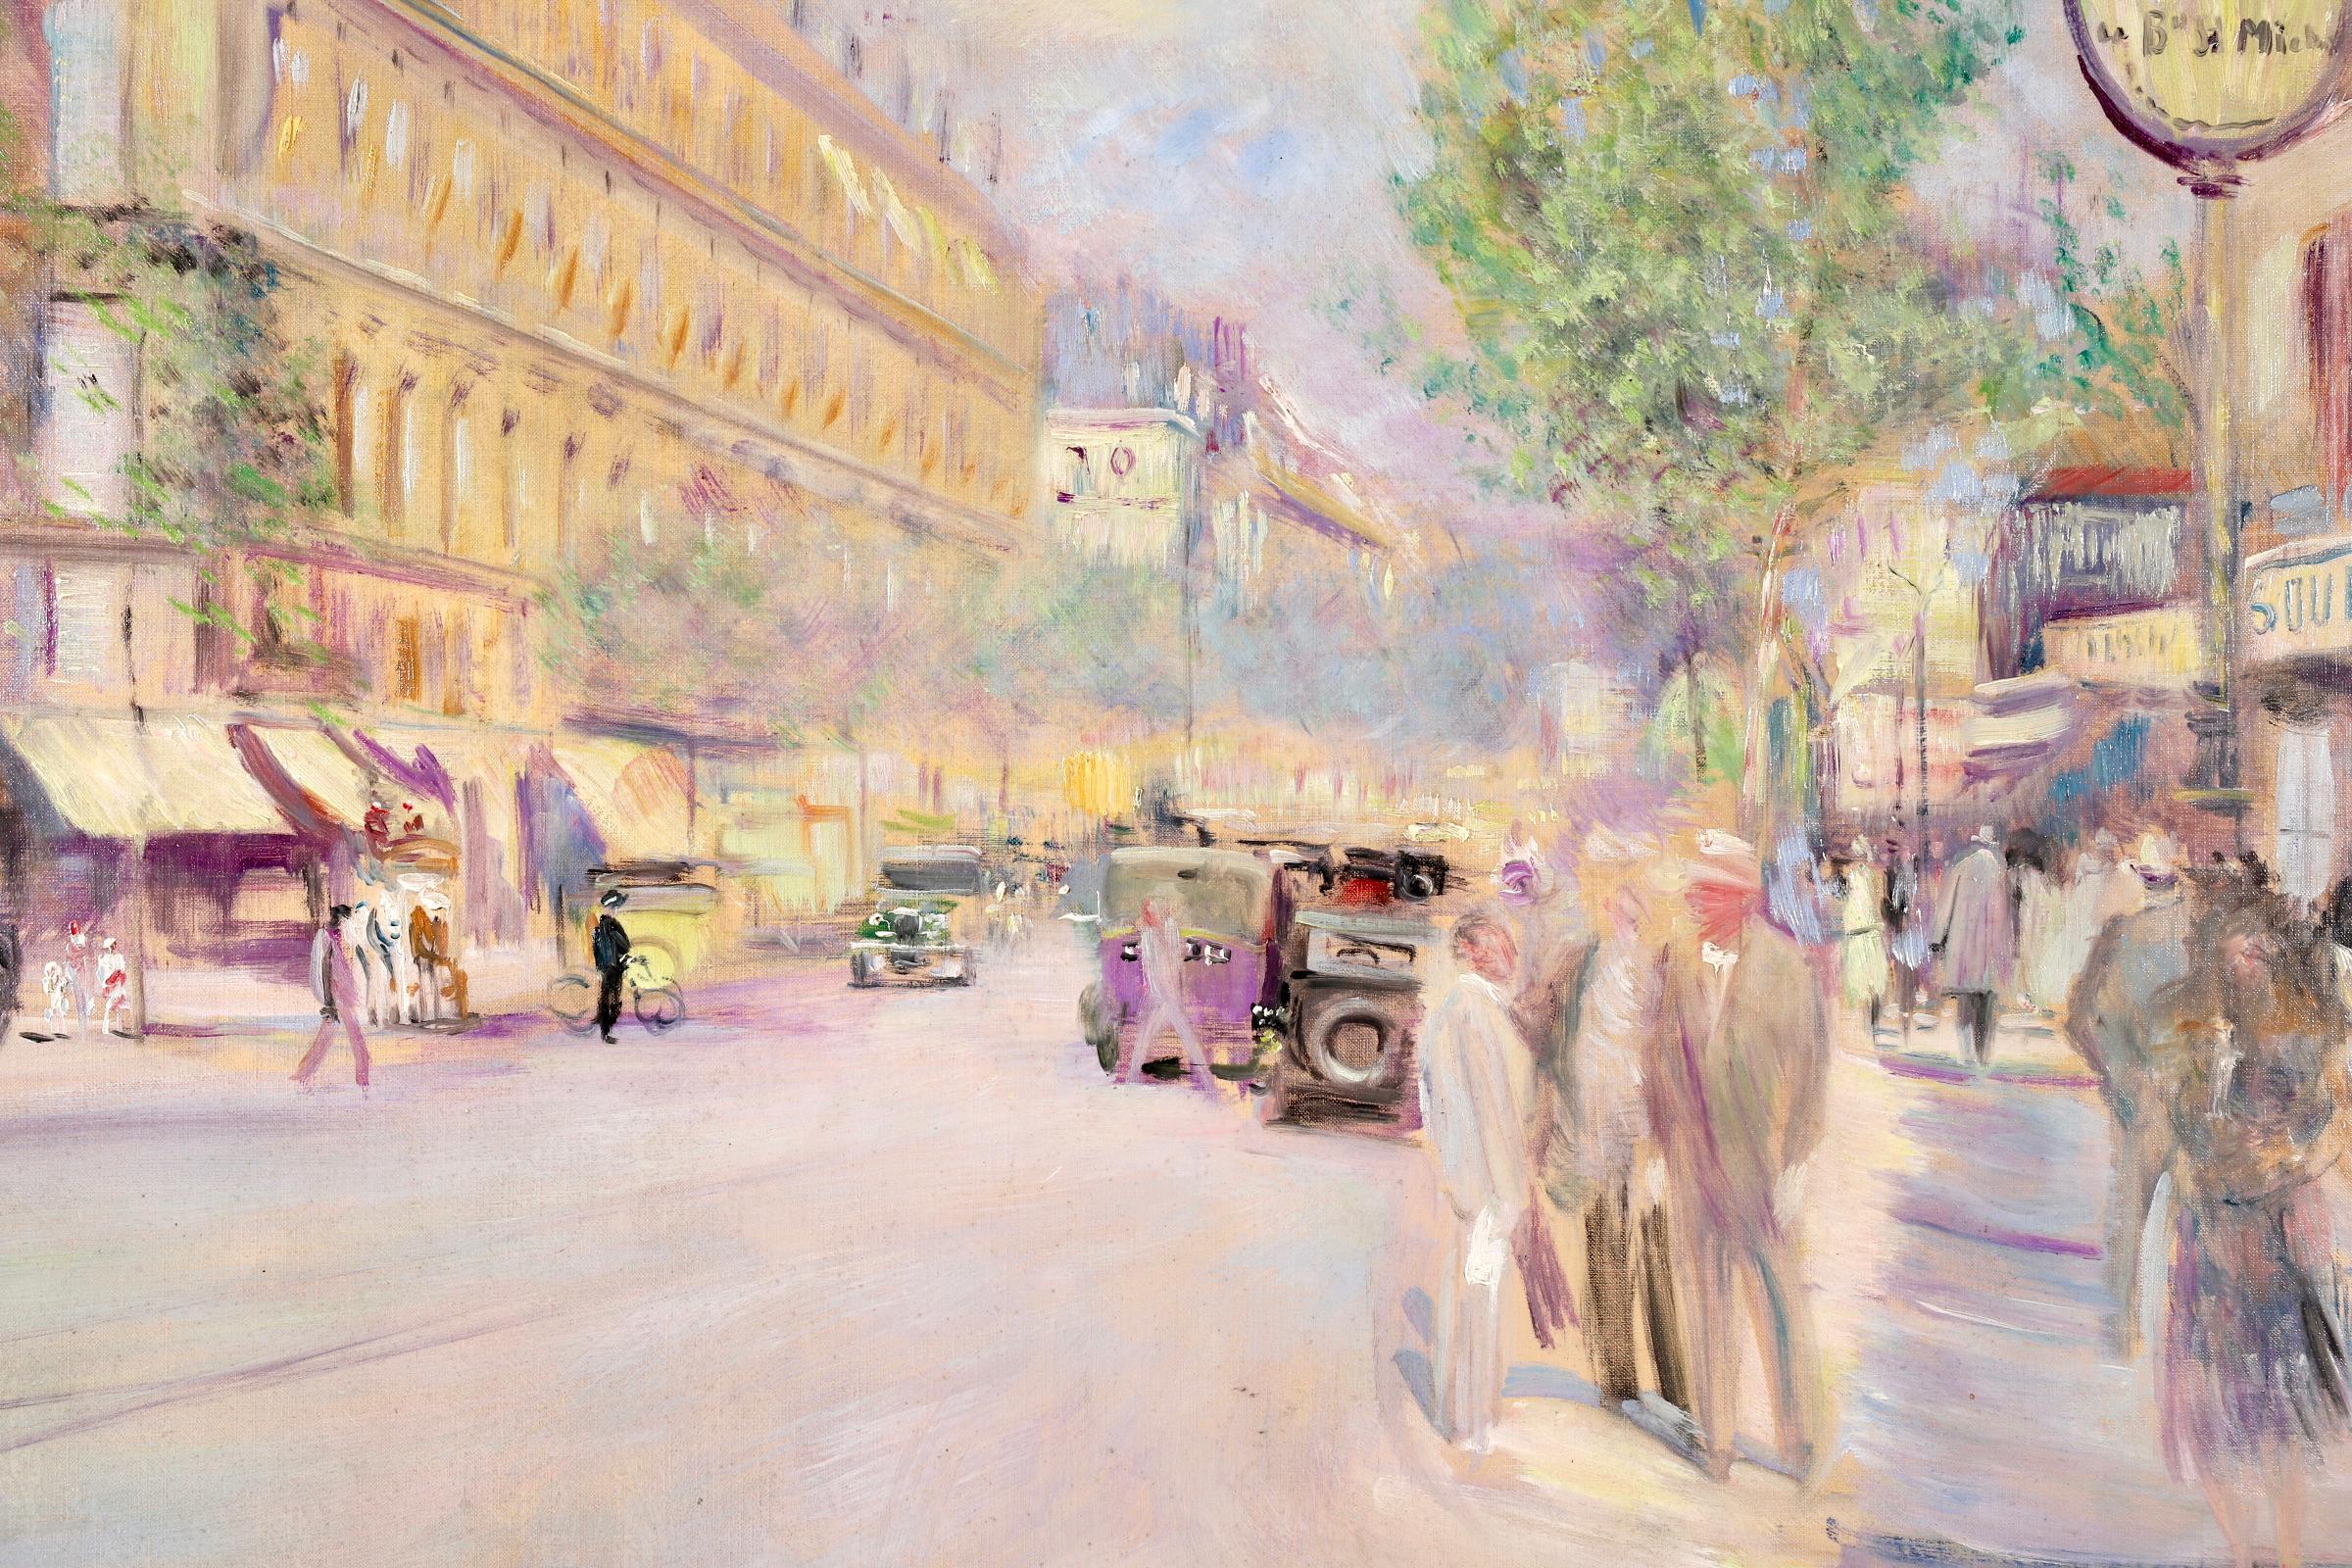 Boulevard Saint-Michel - Paris - Post Impressionist Oil, Cityscape by L Adrion - Gray Figurative Painting by Lucien Adrion